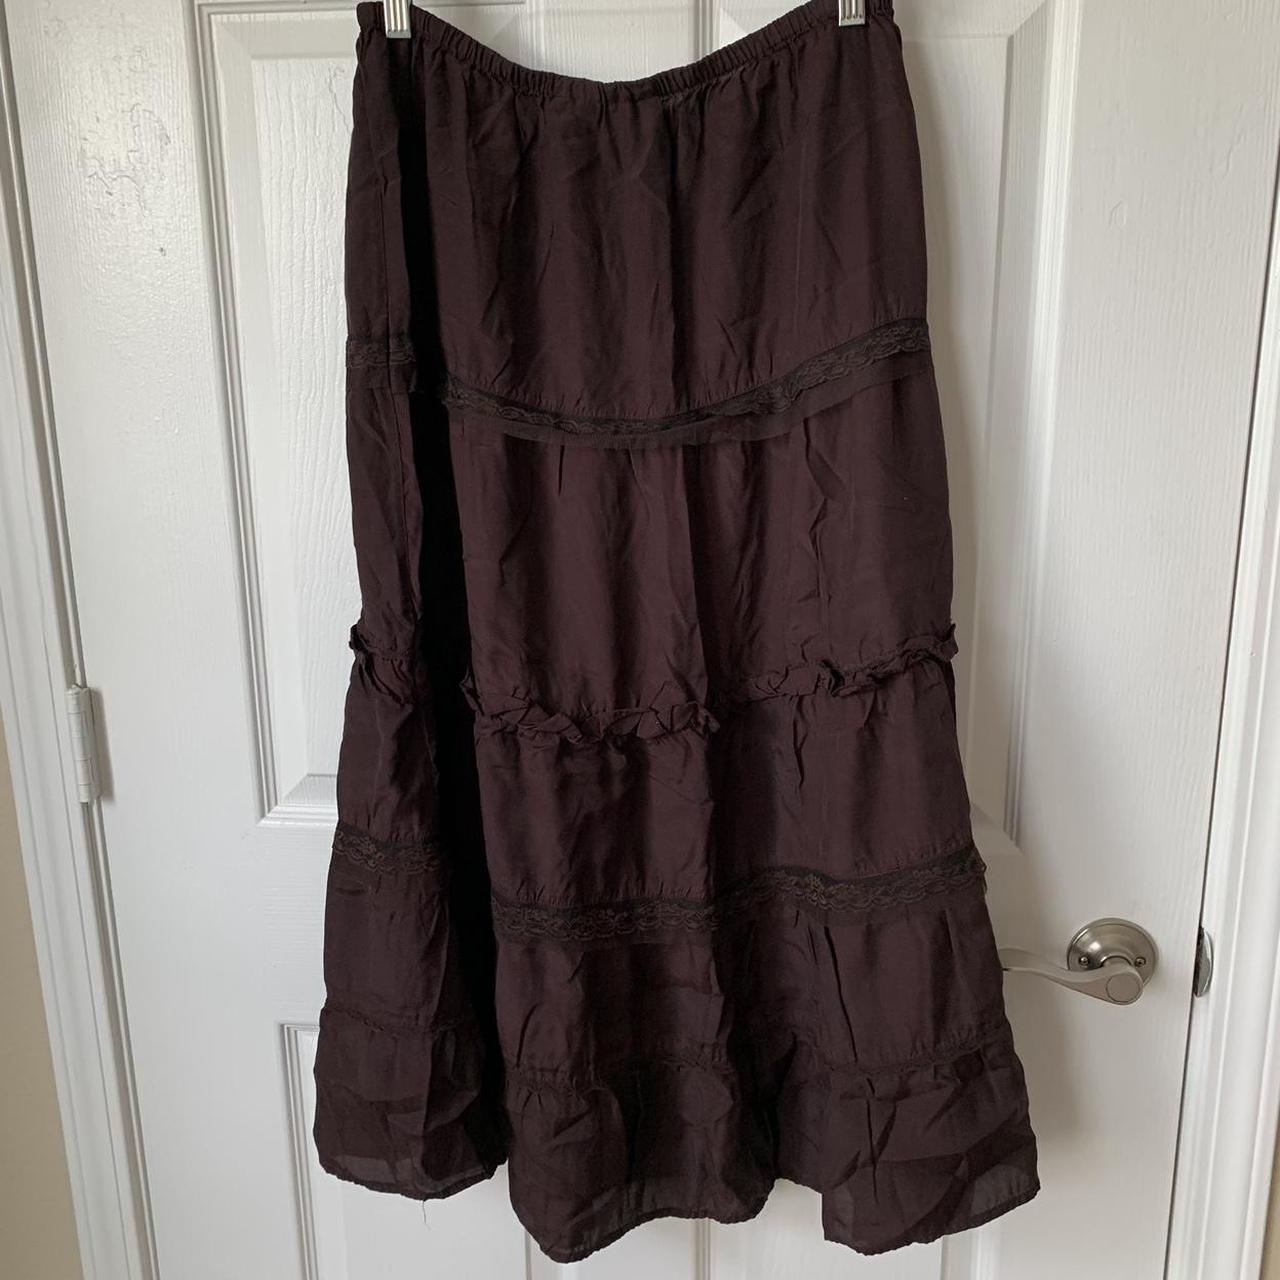 White Stag Women's Brown Skirt (4)